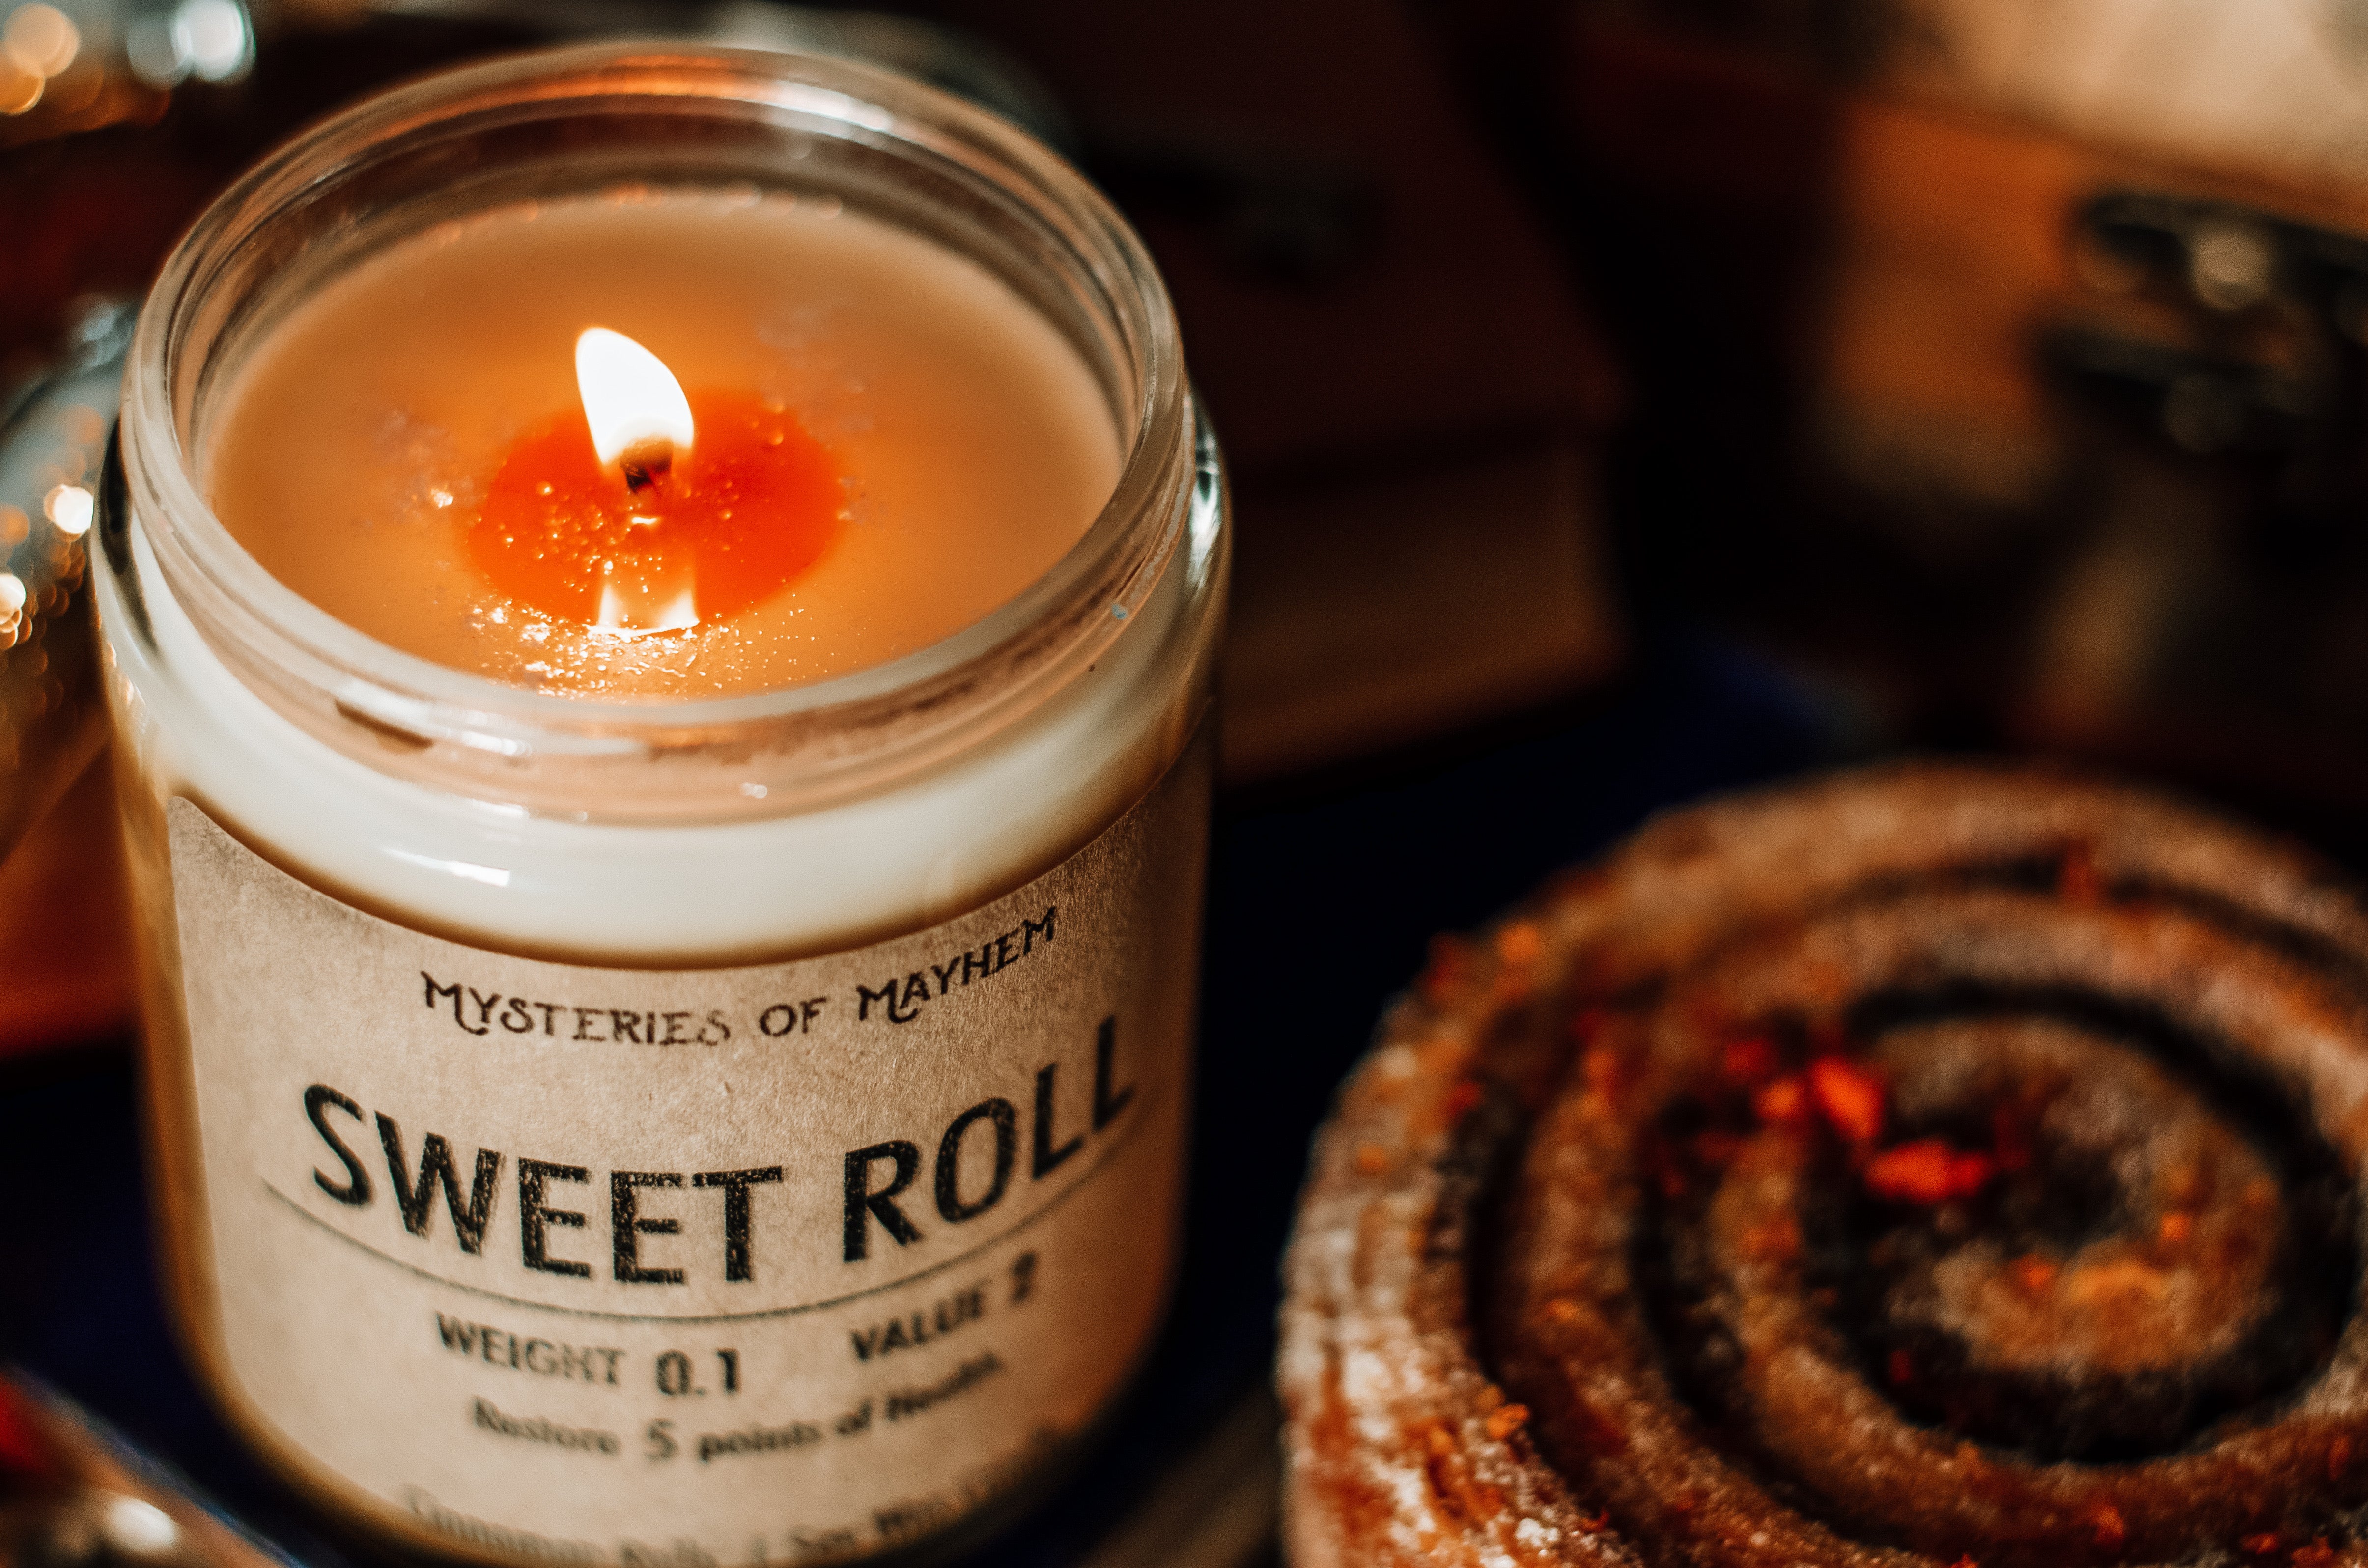 Sweet Roll - Freshly Baked Cinnamon Rolls Scented